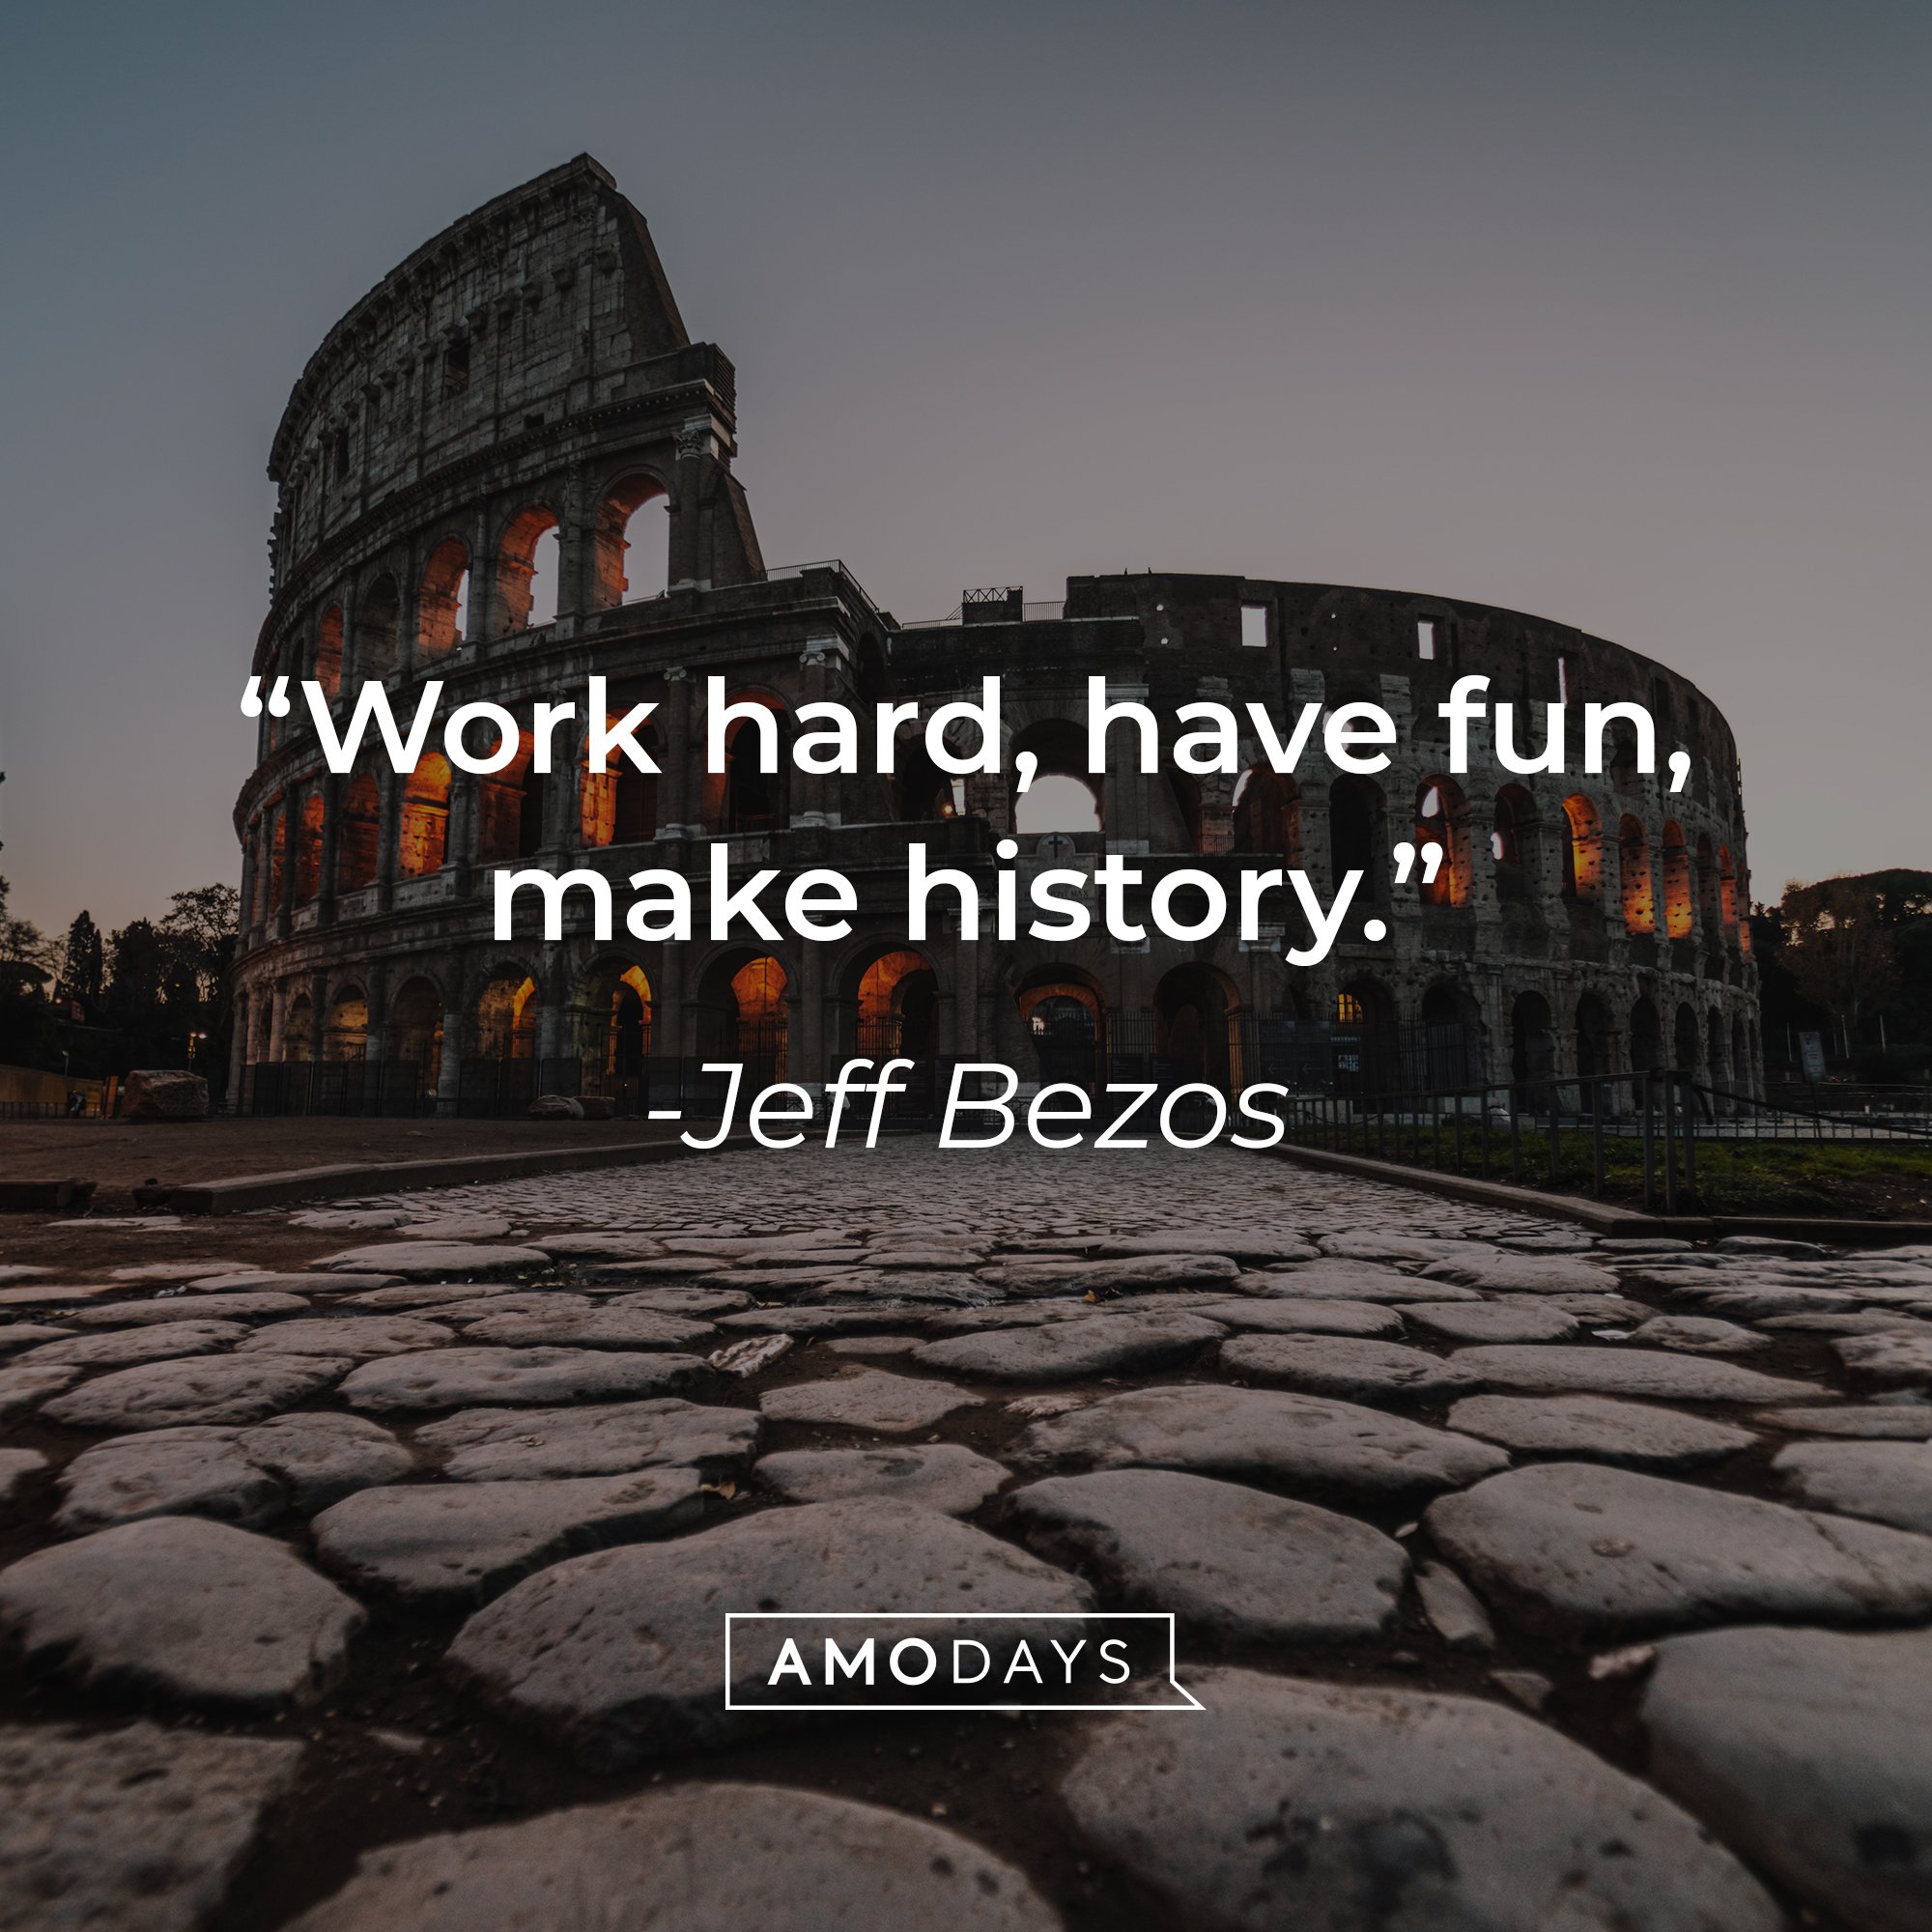 Jeff Bezos' quote: "Work hard, have fun, make history." | Image: AmoDays